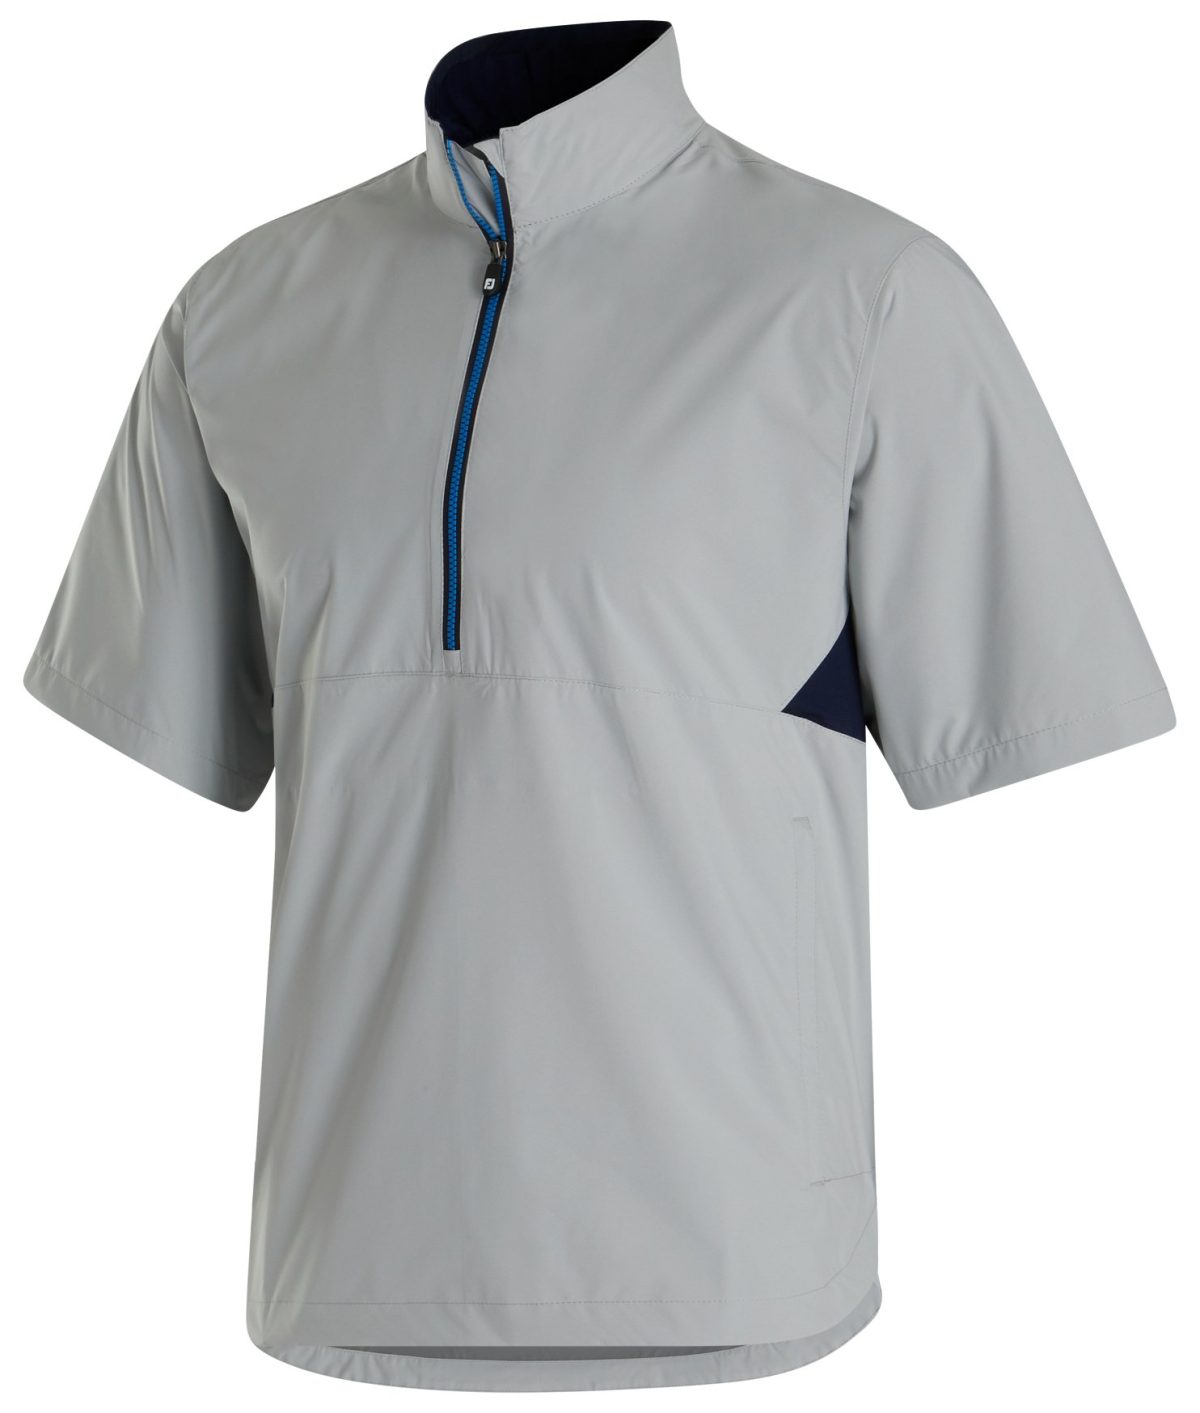 FootJoy Men's Hydrolite X Short Sleeve Golf Rain Shirt in Grey/Navy, Size S